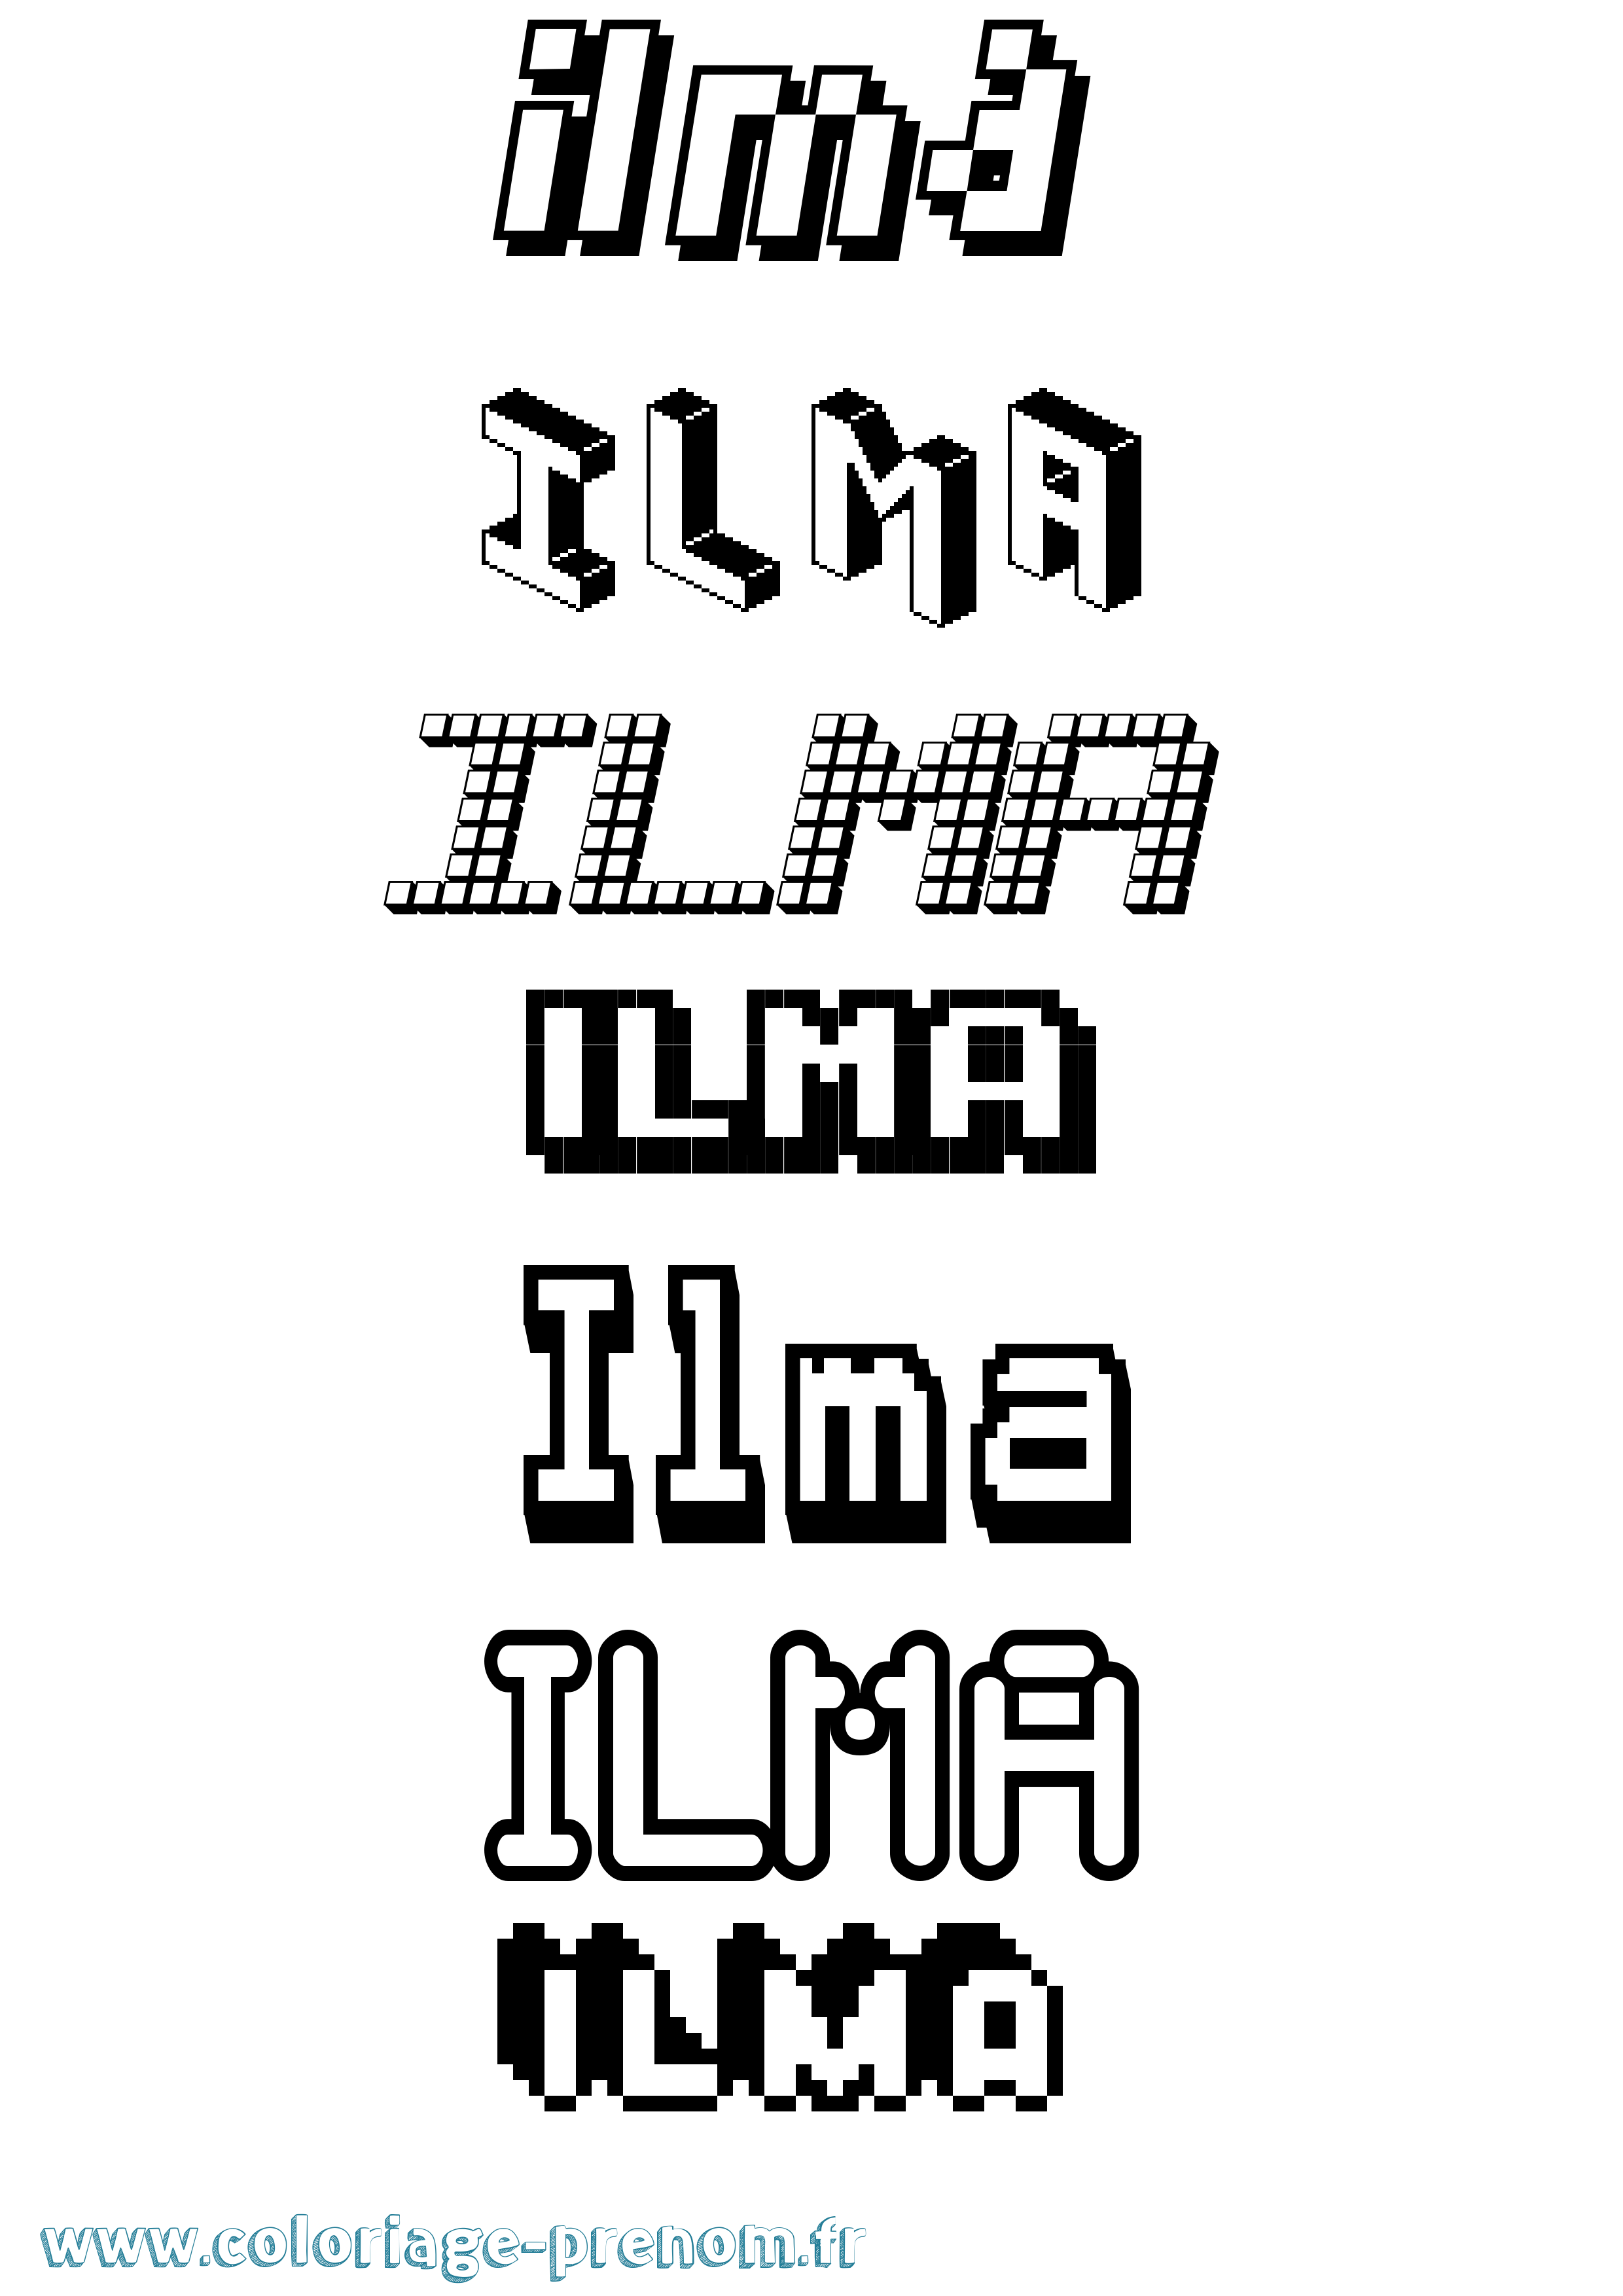 Coloriage prénom Ilma Pixel